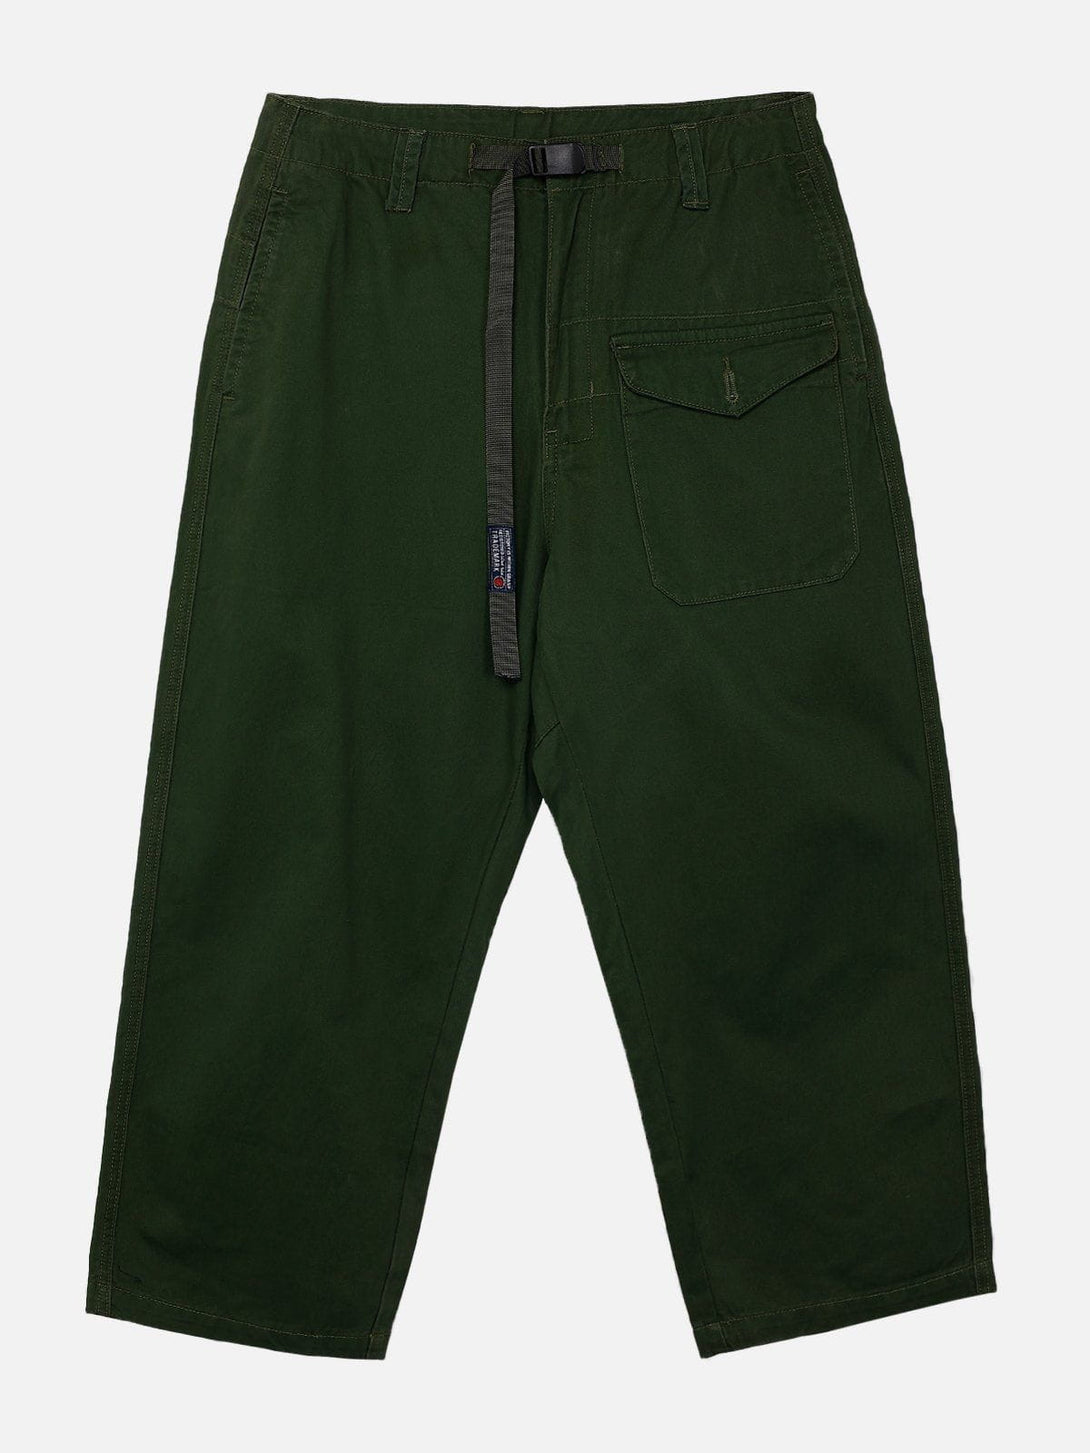 Majesda® - Solid Belt Pants outfit ideas streetwear fashion